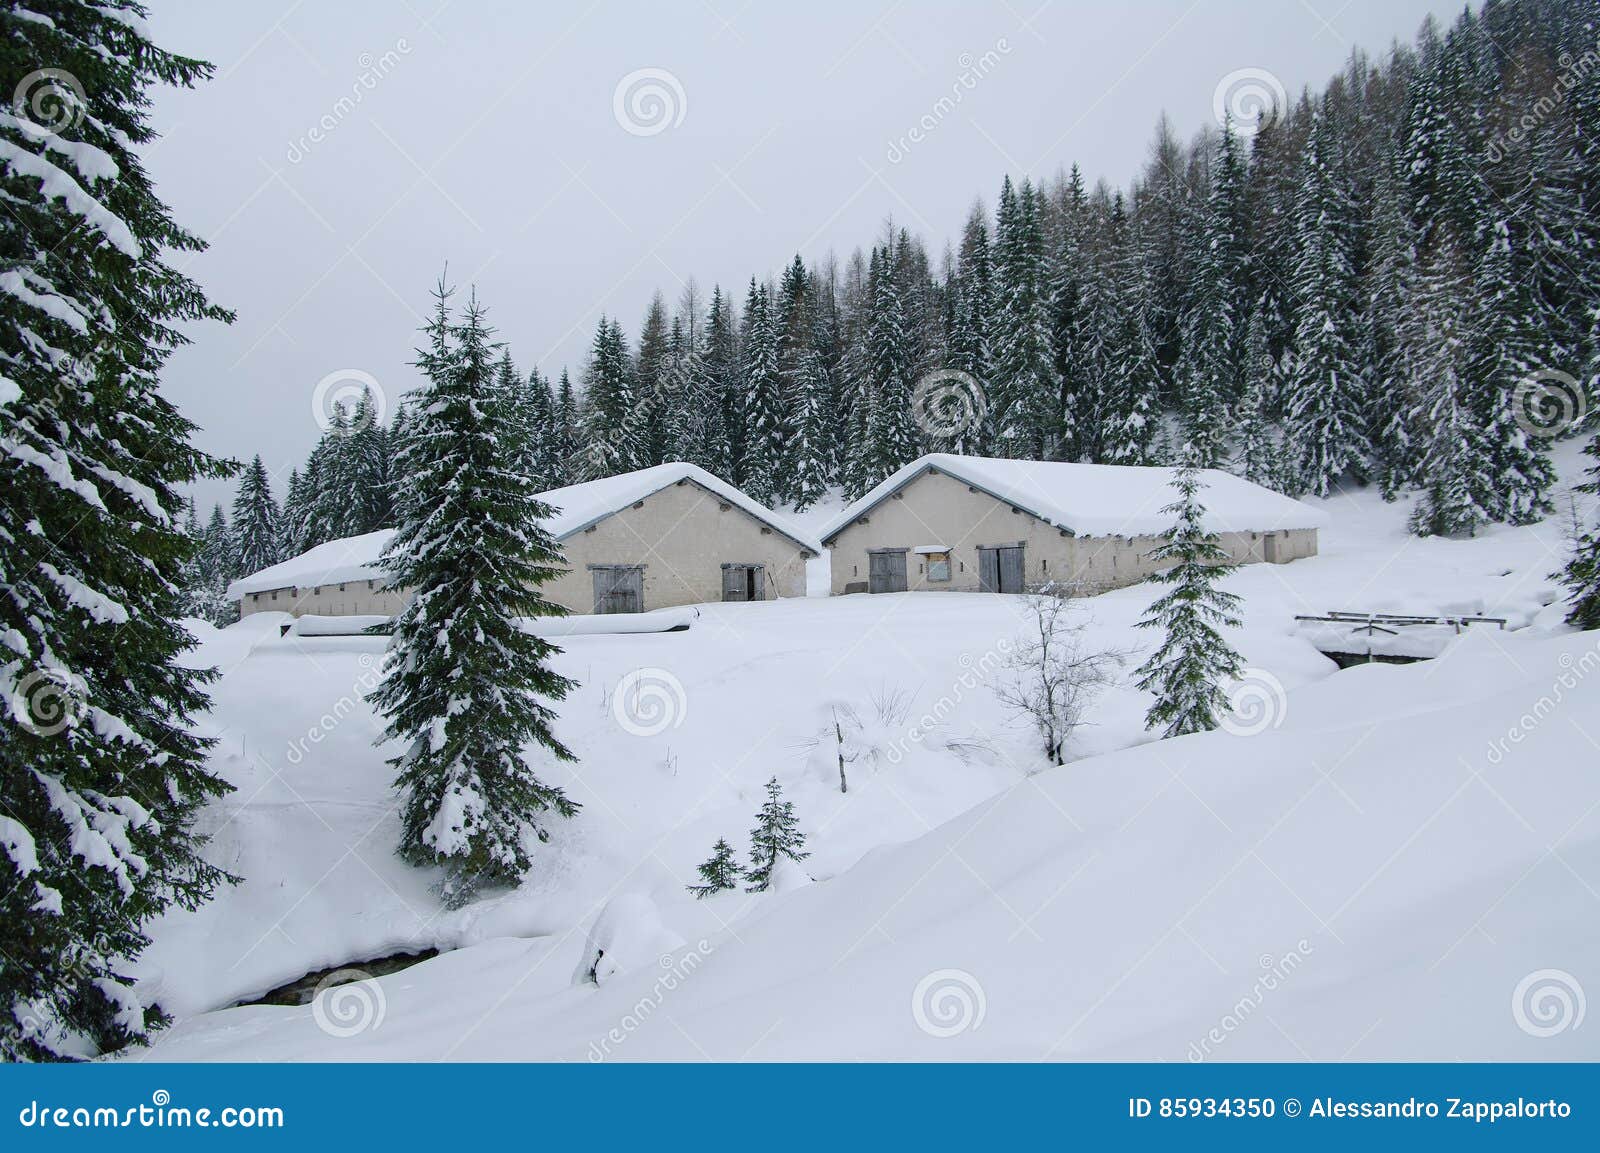 casera aiarnola under the snow.